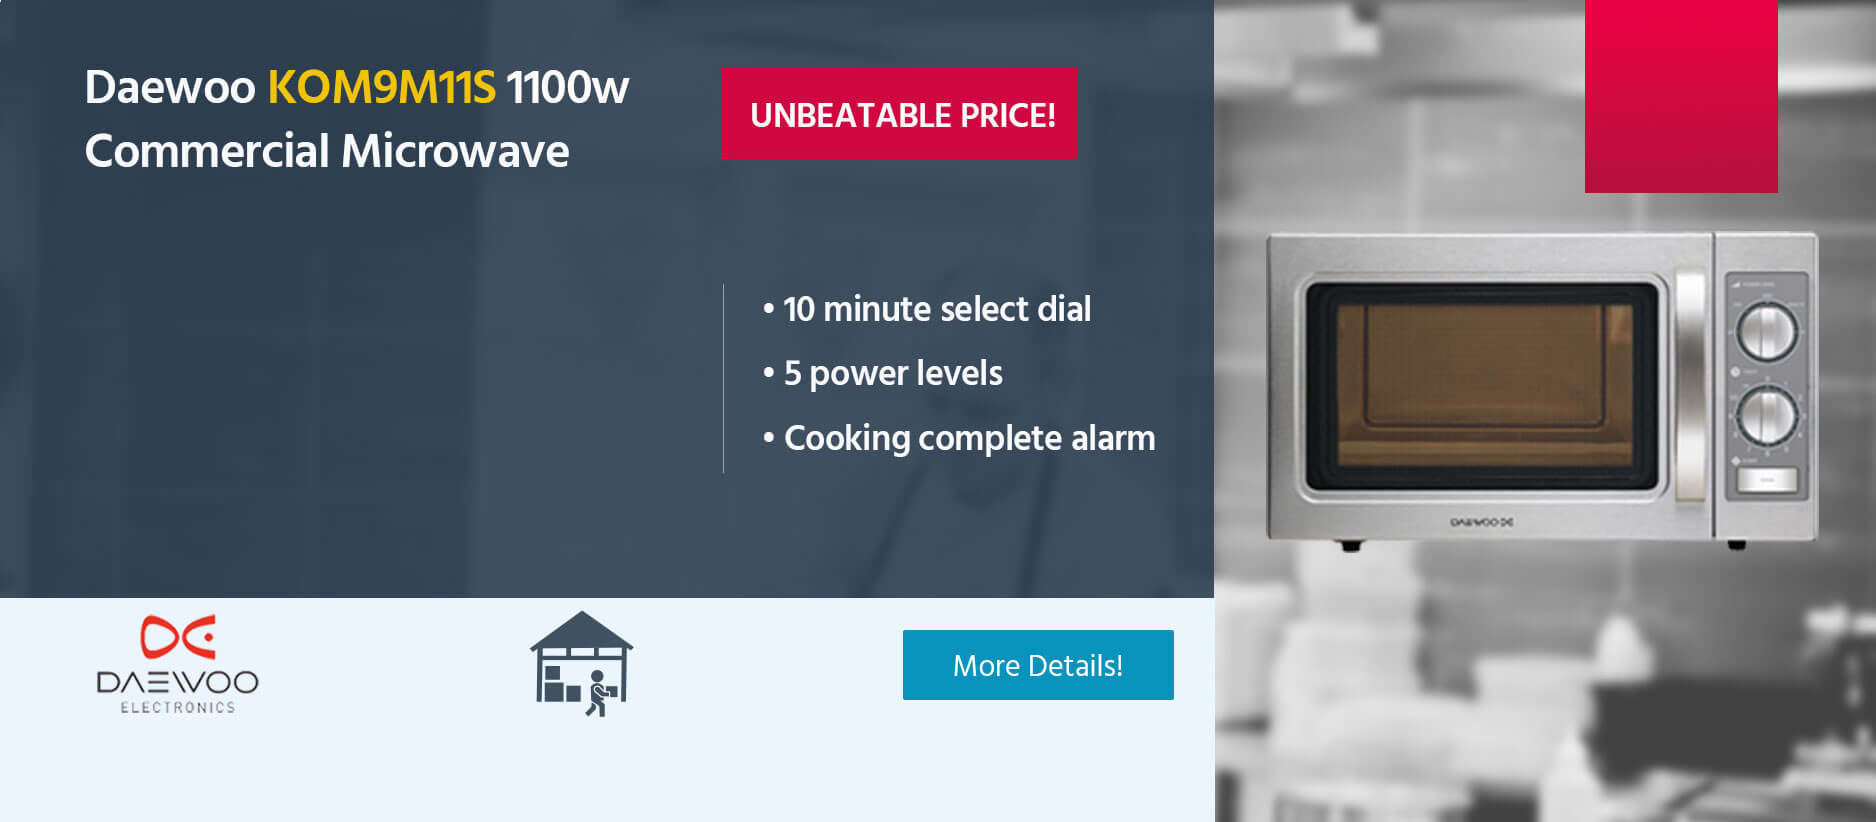 Daewoo KOM9M11S 1100w Commercial Microwave